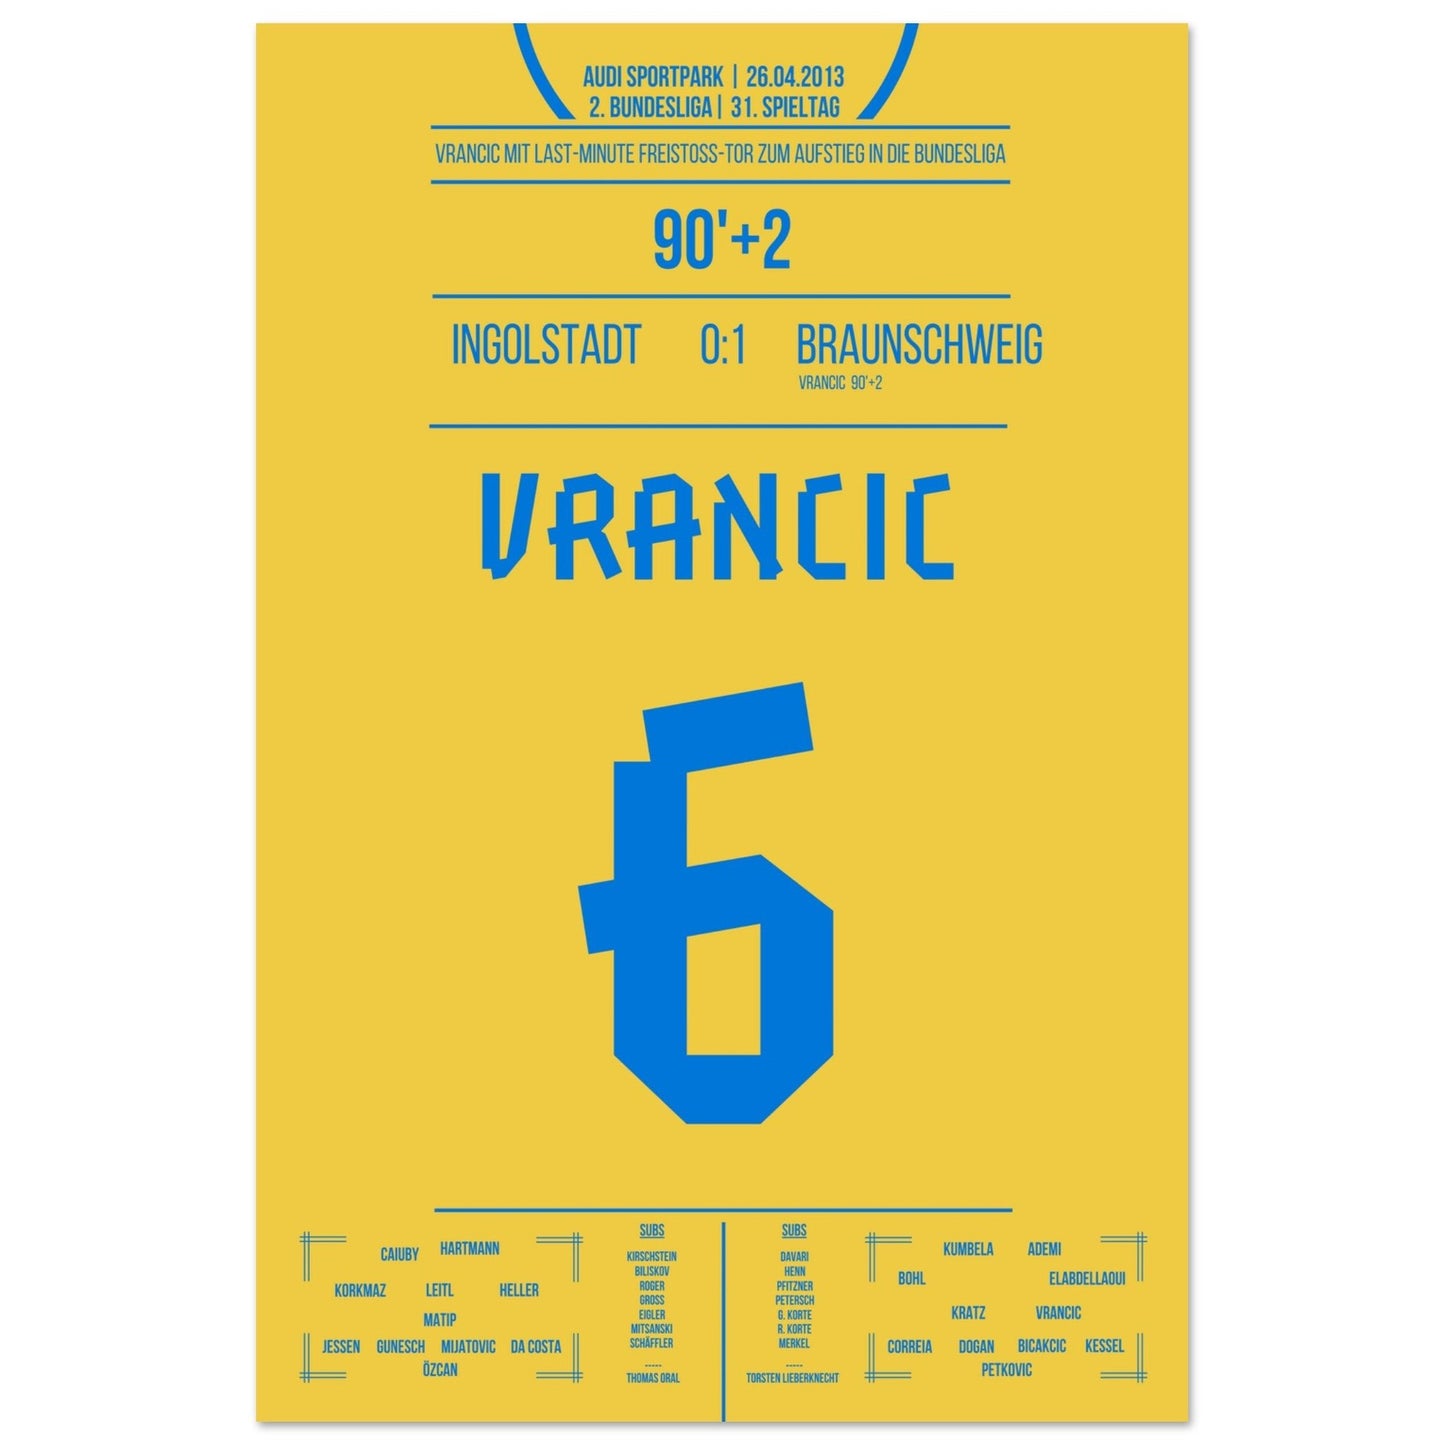 Vrancic's Freistoss-Treffer zum Bundesliga-Aufstieg 2013 60x90-cm-24x36-Ohne-Rahmen